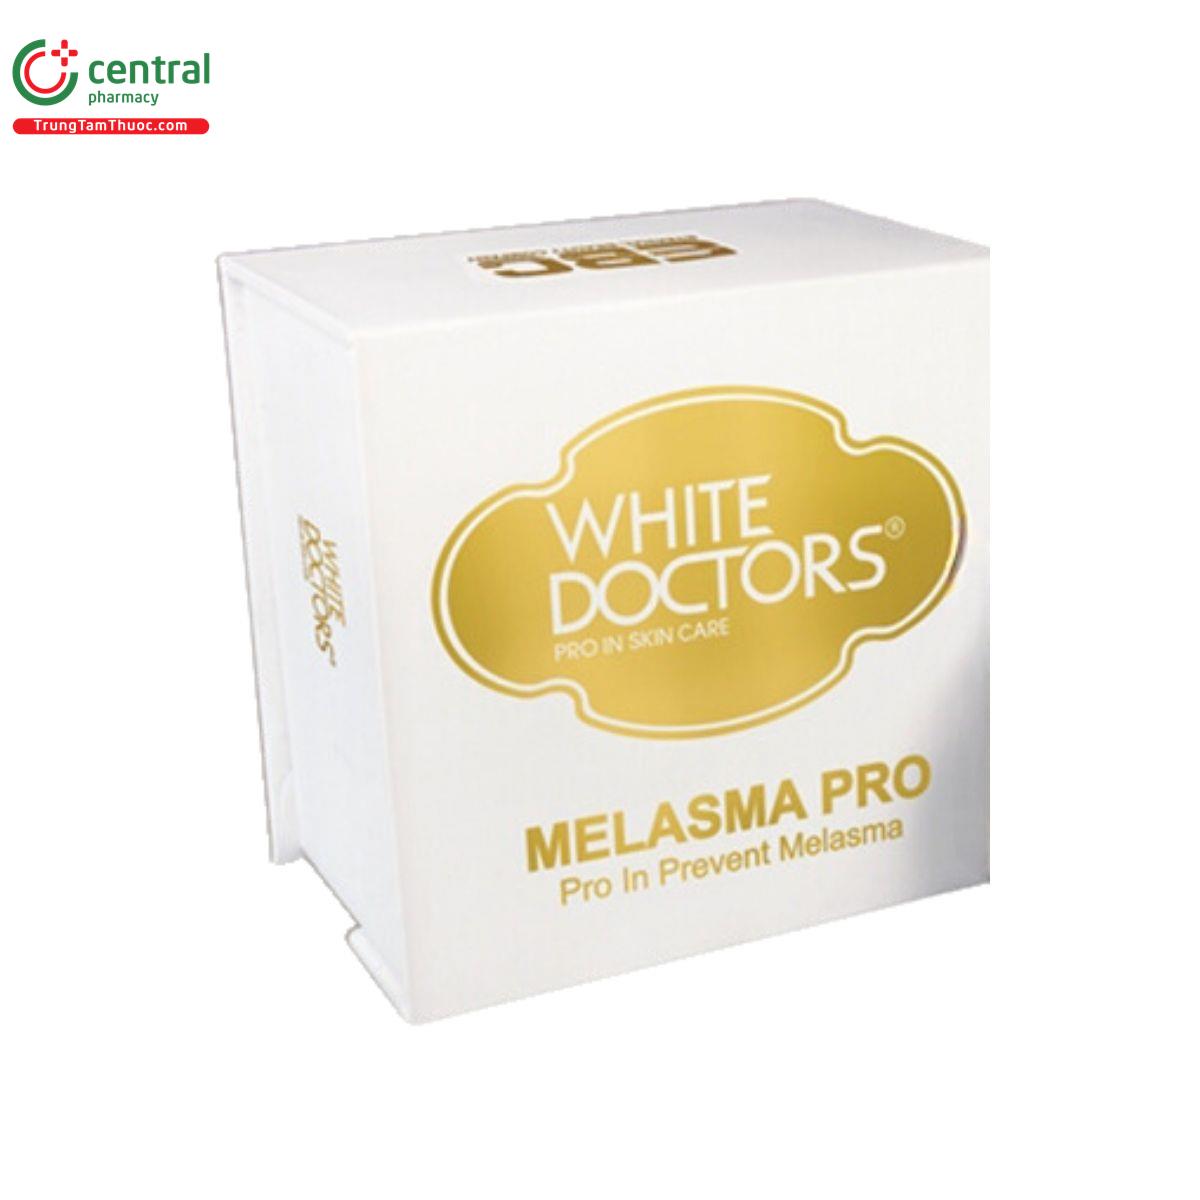 white doctors melasma pro 4 H2215